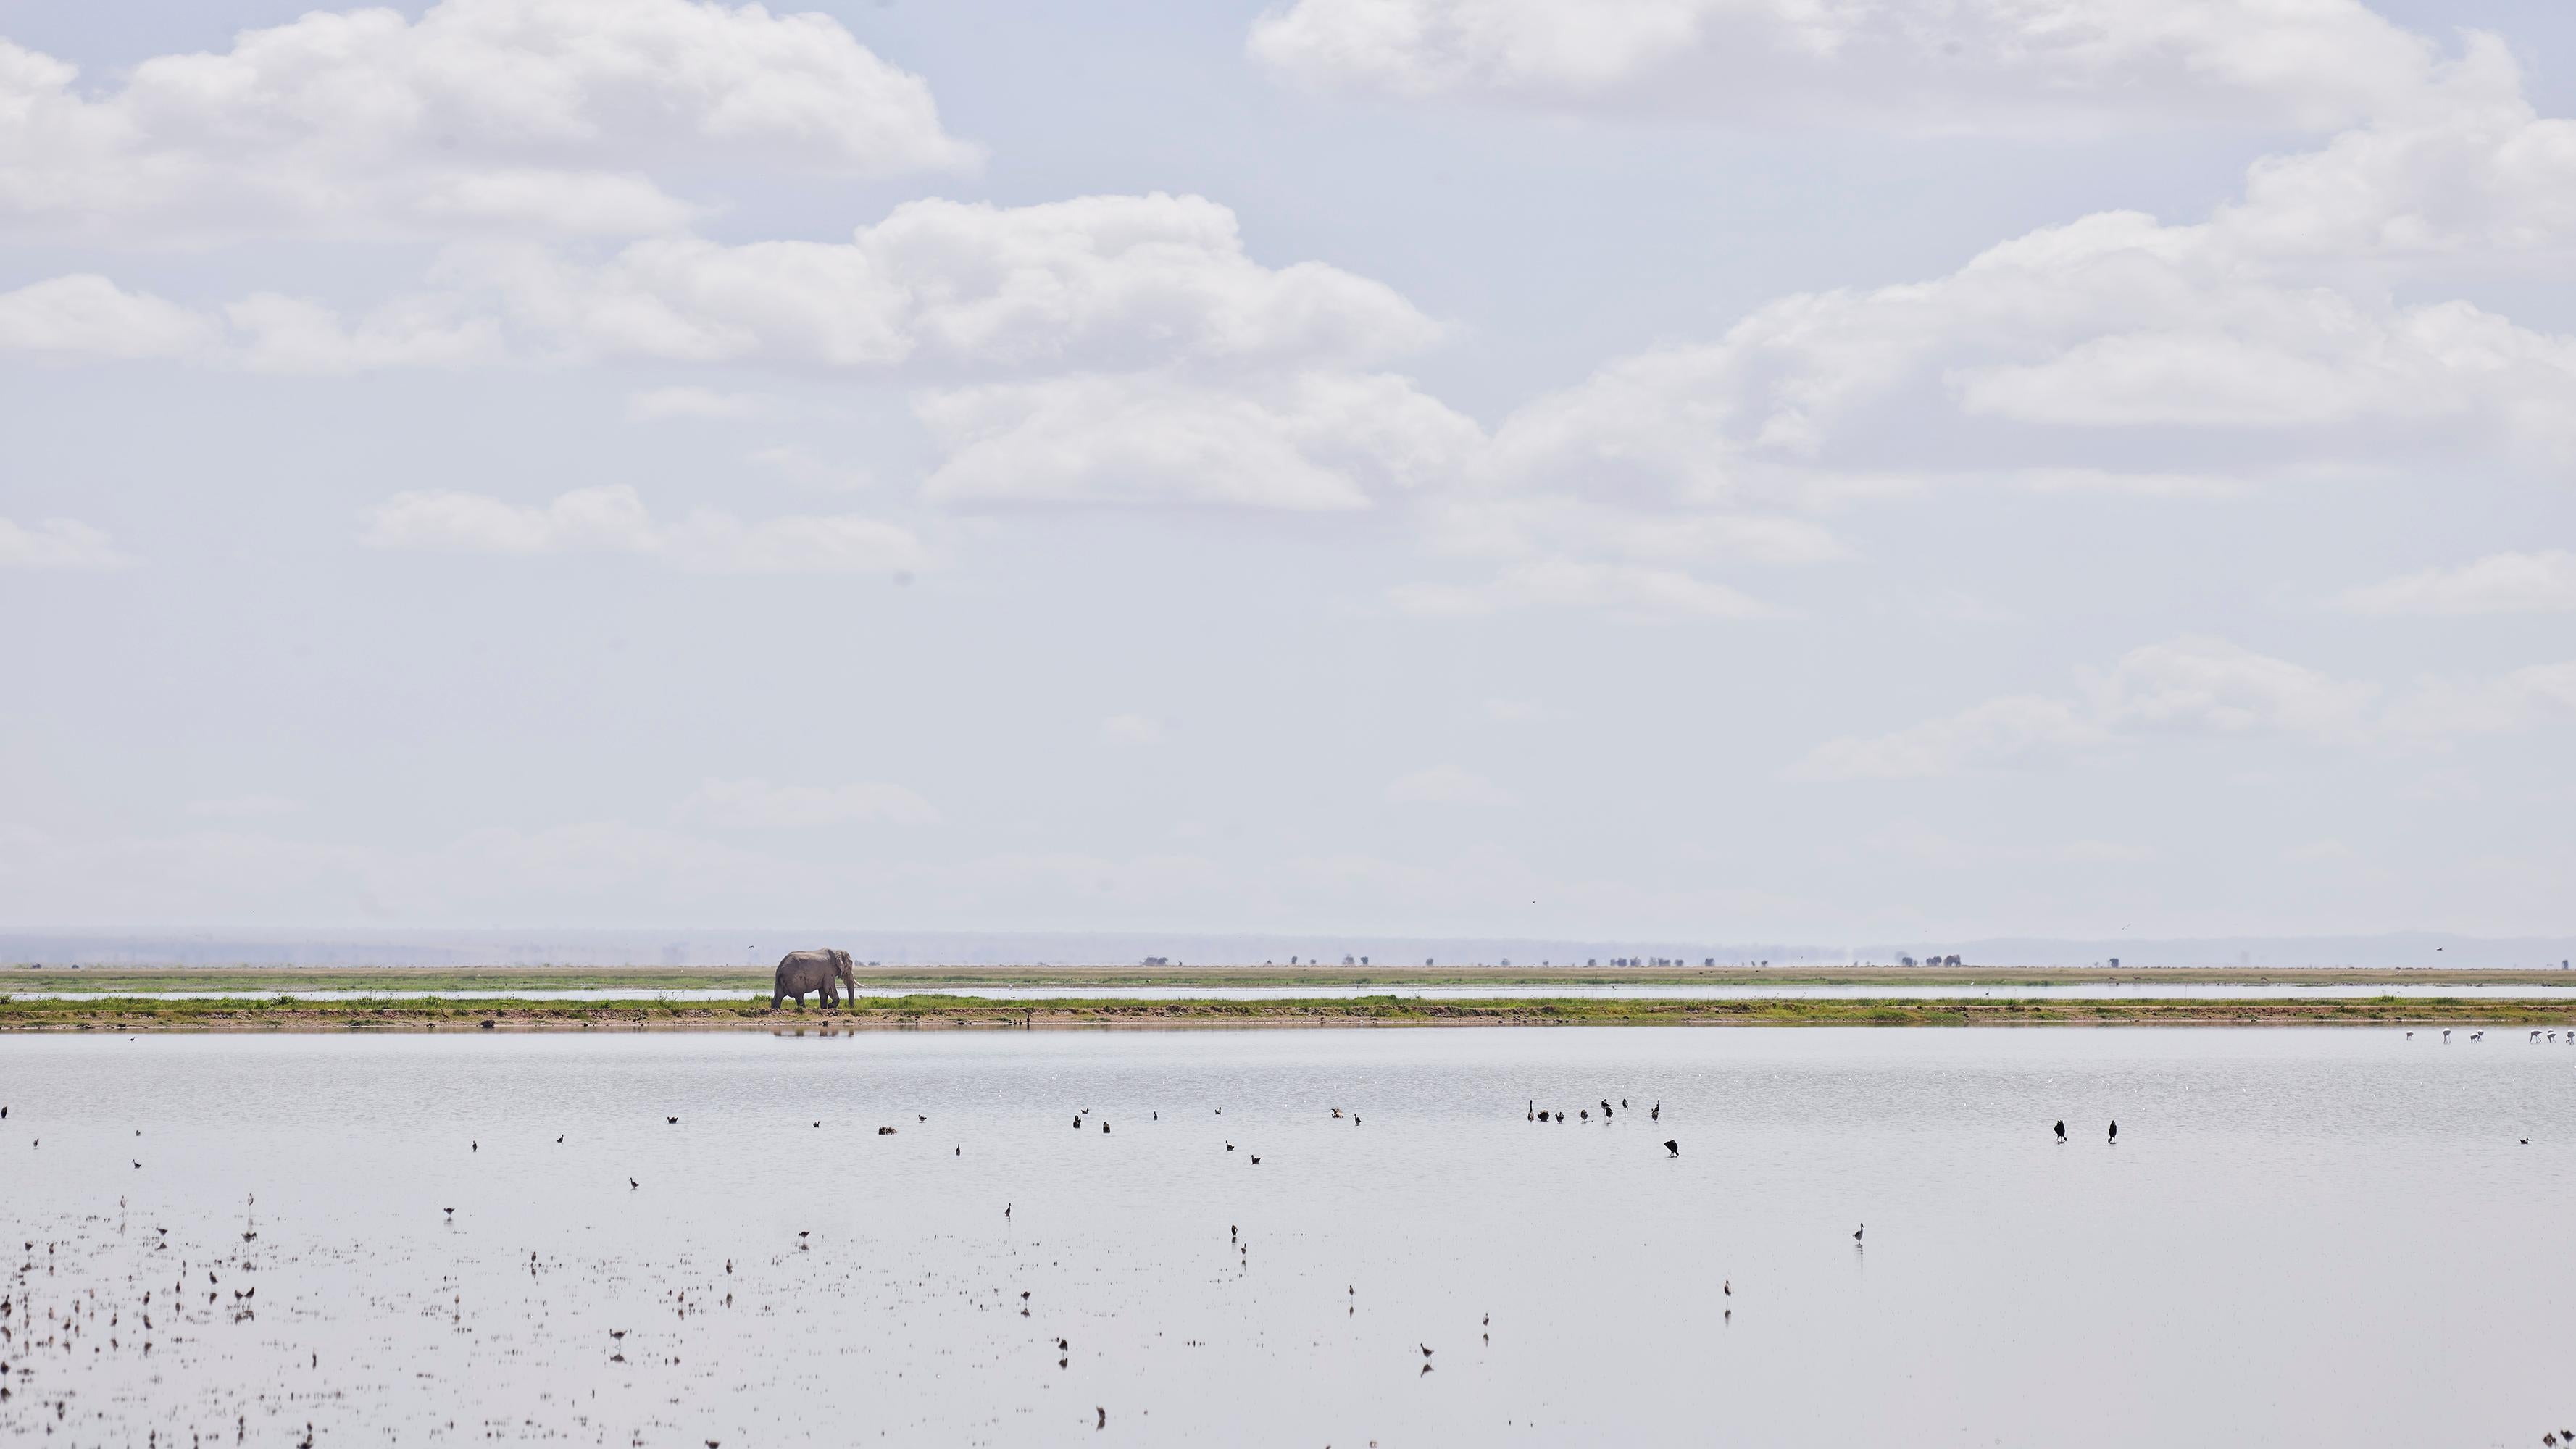 Elefant auf dem Horizont, Amboseli, Kenya